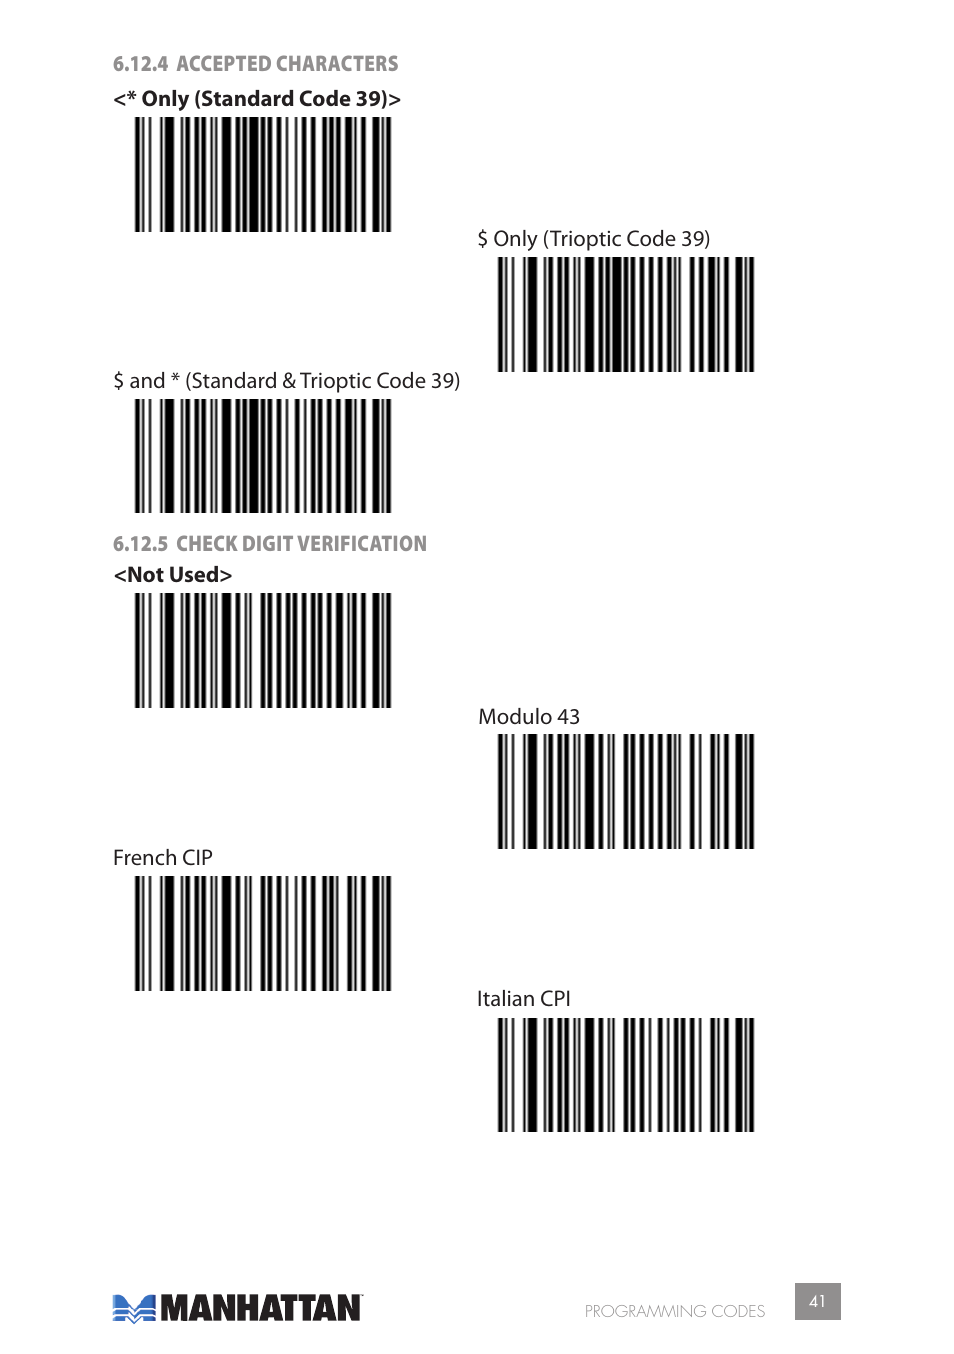 Manhattan 177603 2D Barcode Scanner - Manual User Manual | Page 41 / 80